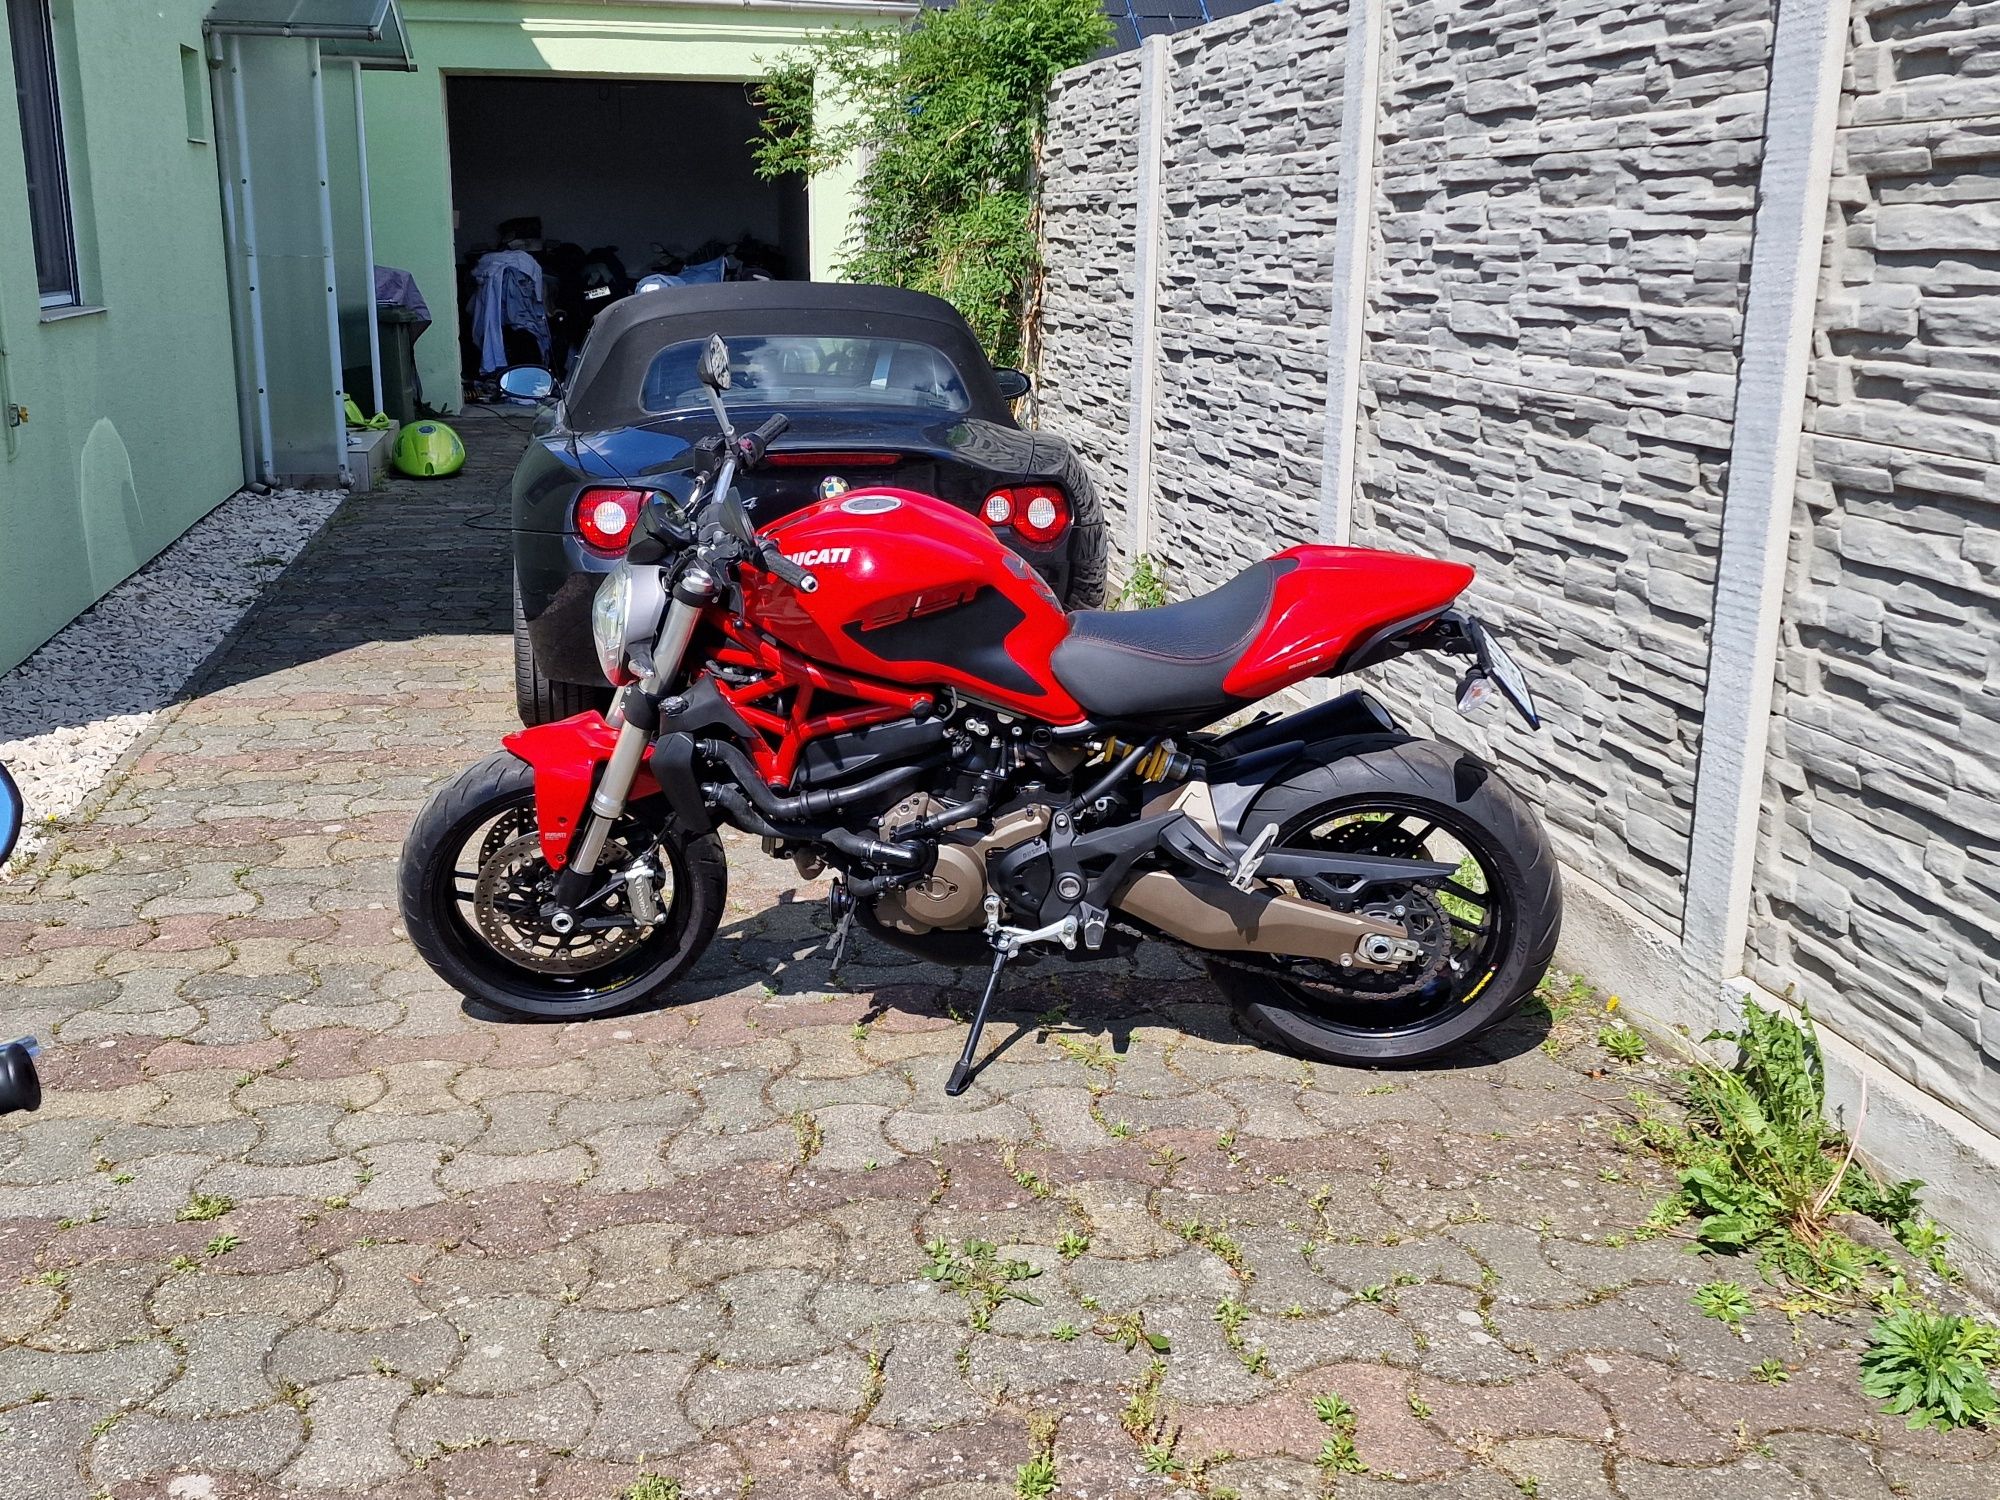 Ducati monster 821 ,cu 18000 km ,115 cp cu
ABS,Traction control .Toate